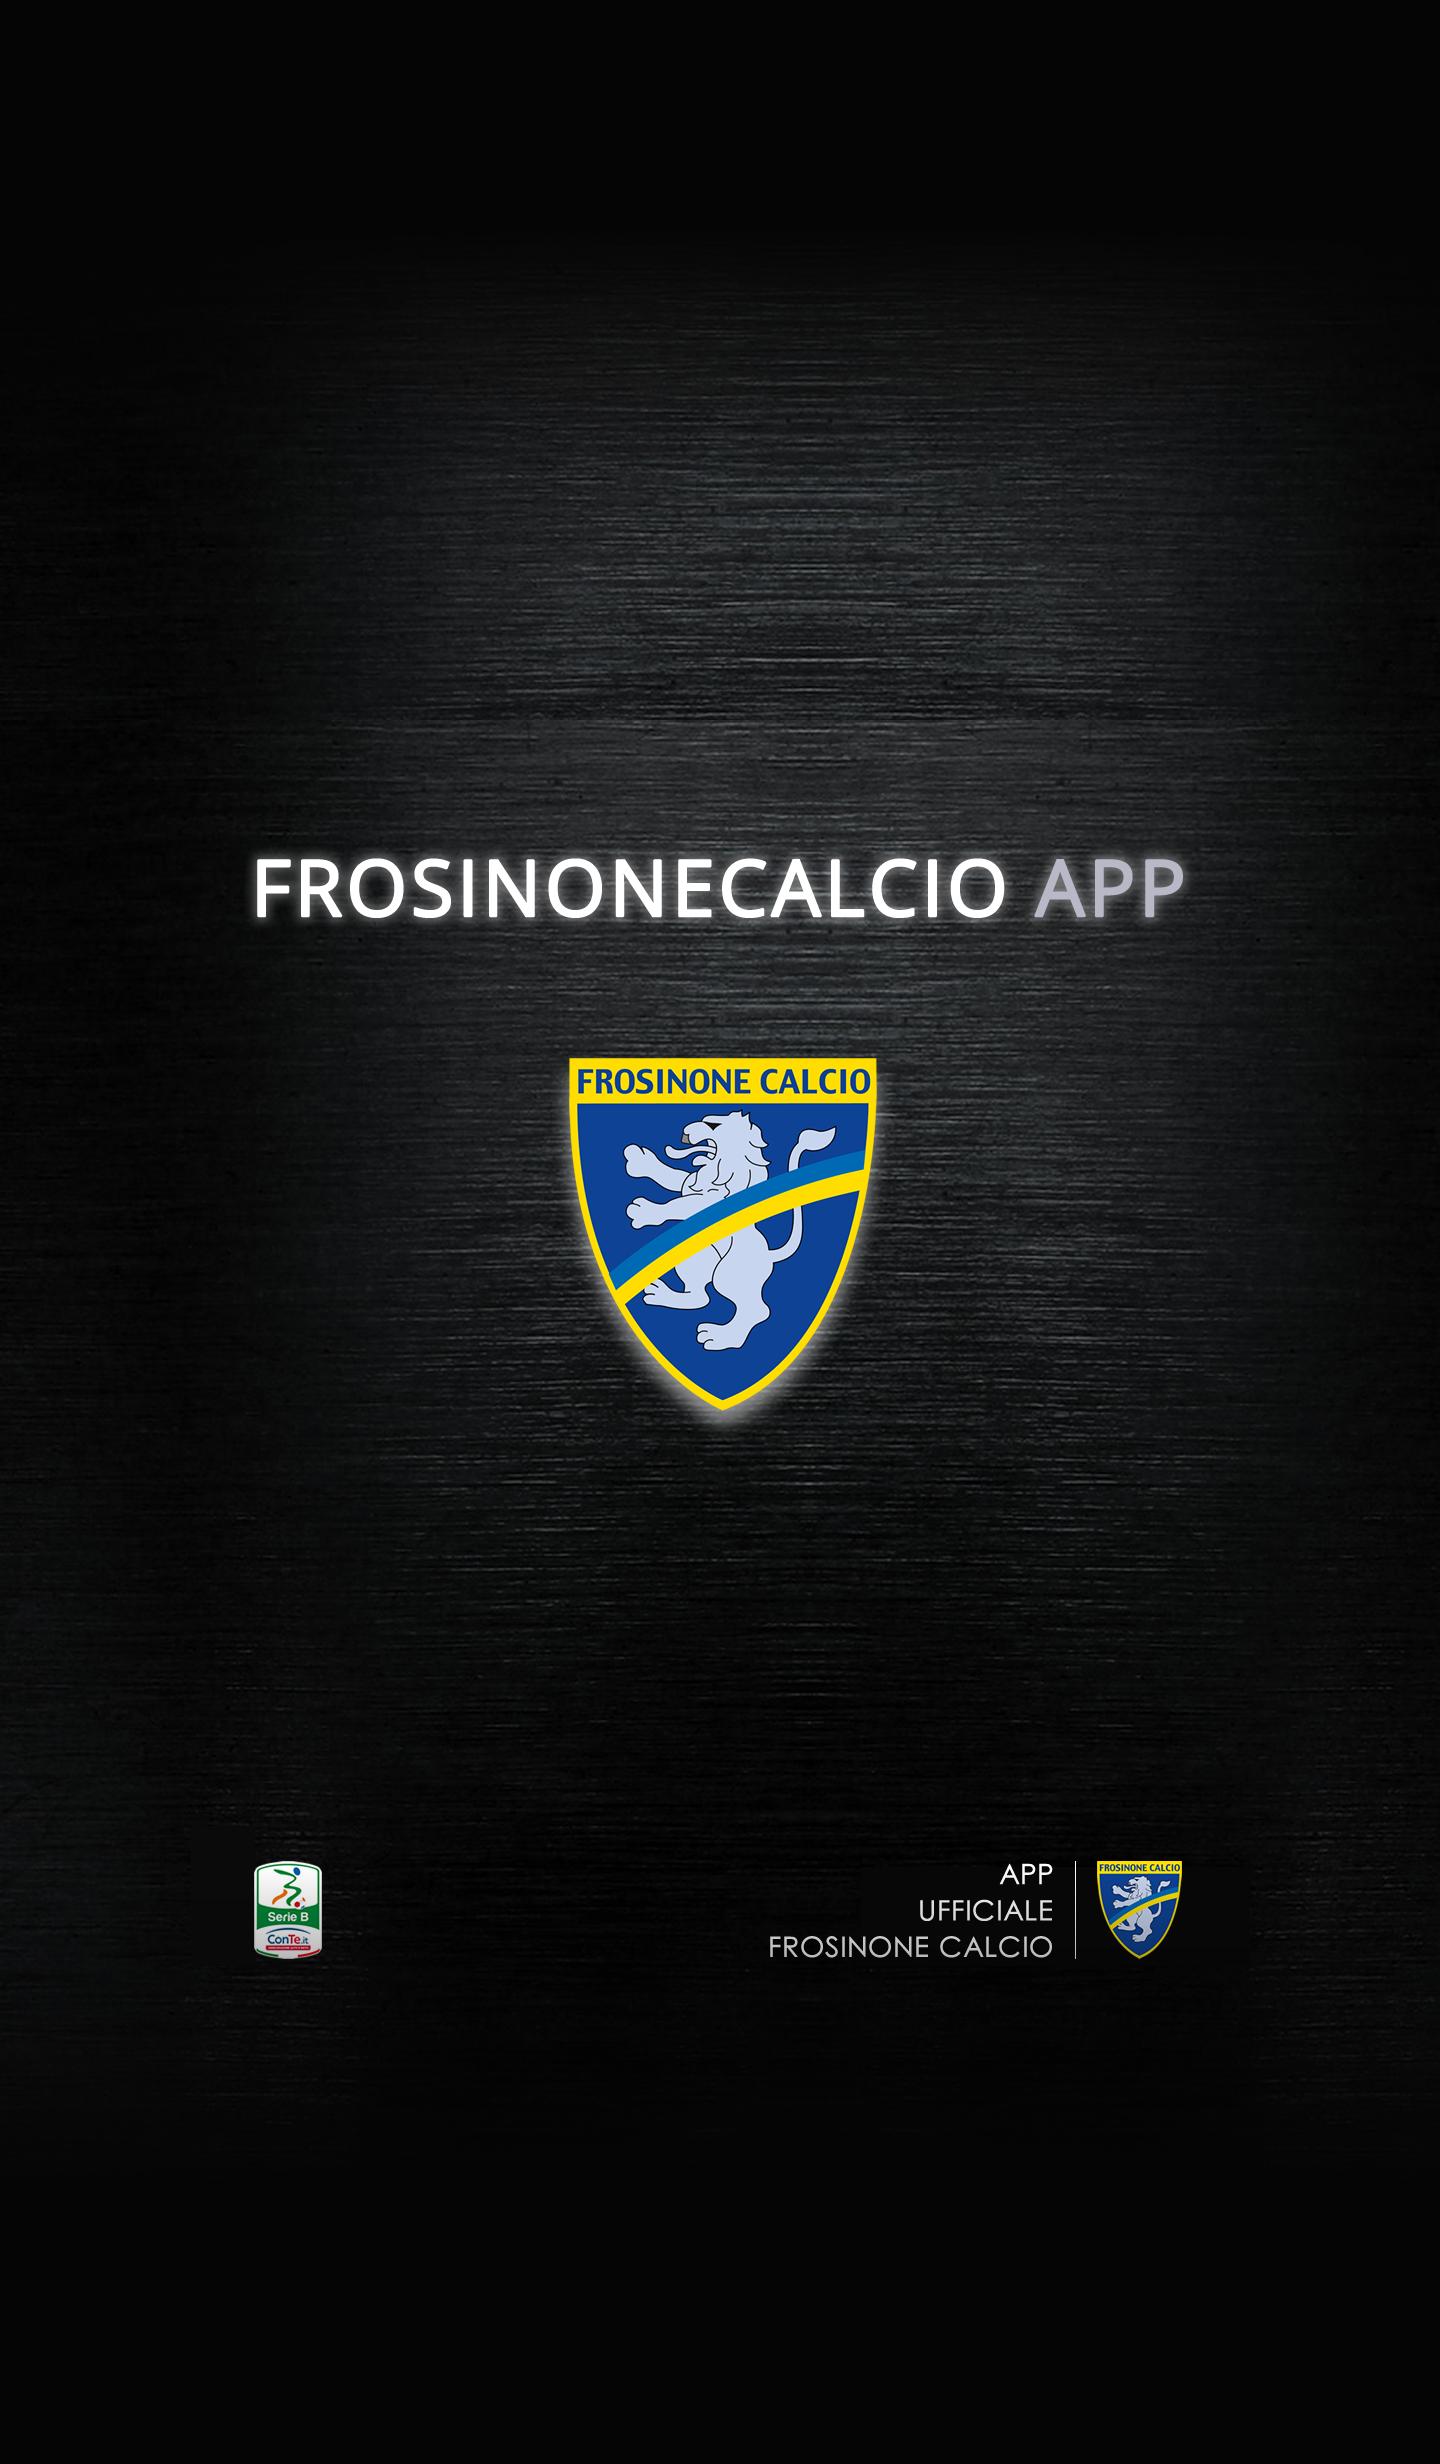 FrosinoneCalcio for Android - APK Download